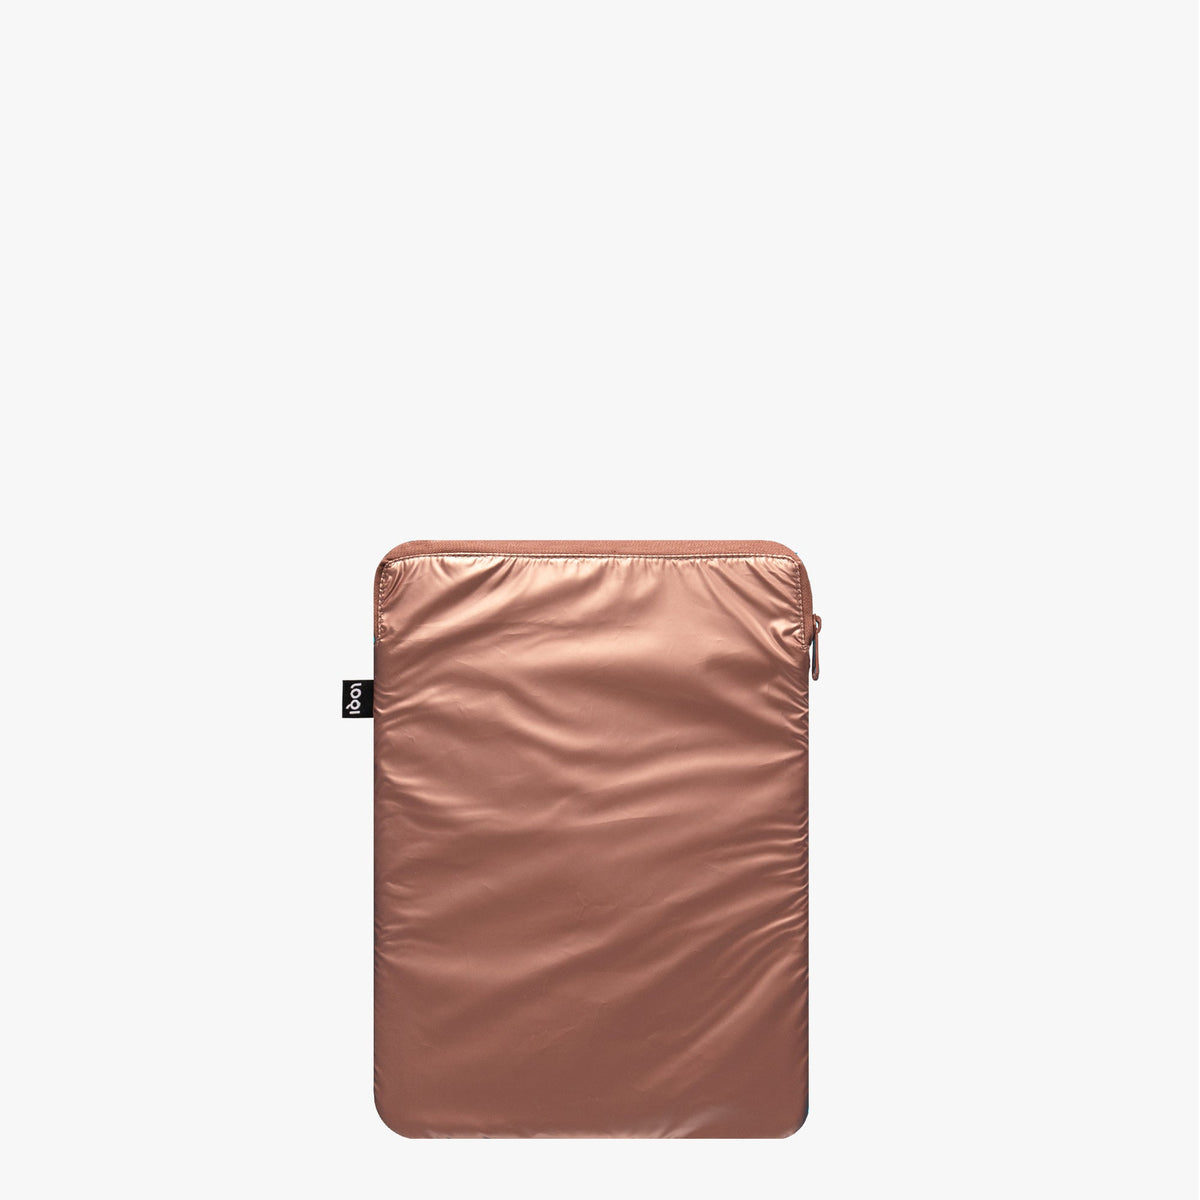 Rose Gold Laptop Sleeve 24 x 33 cm